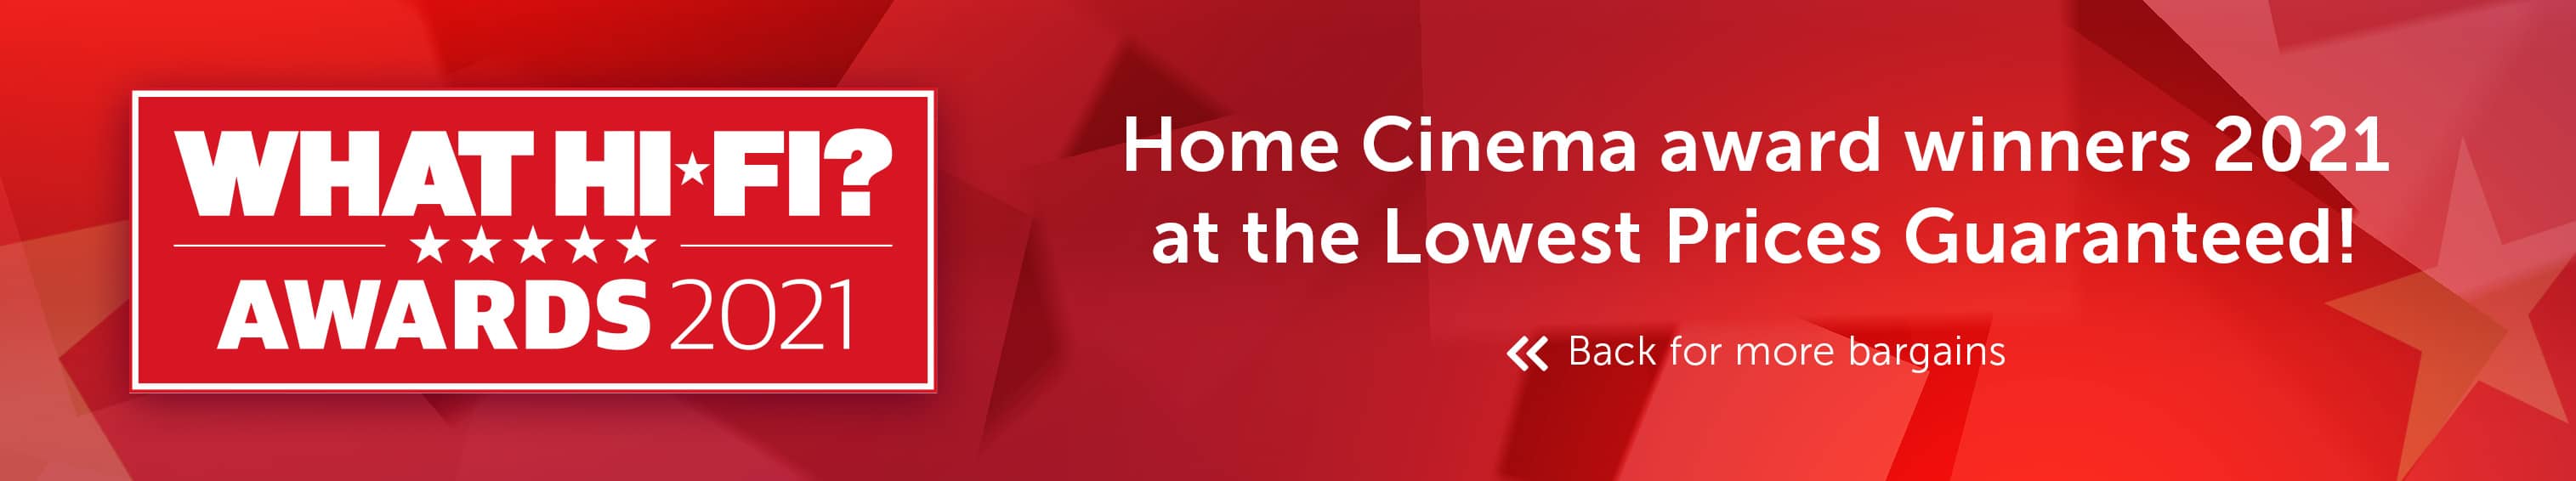 What Hi-Fi? Best Buy Awards 2021 - Home Cinema